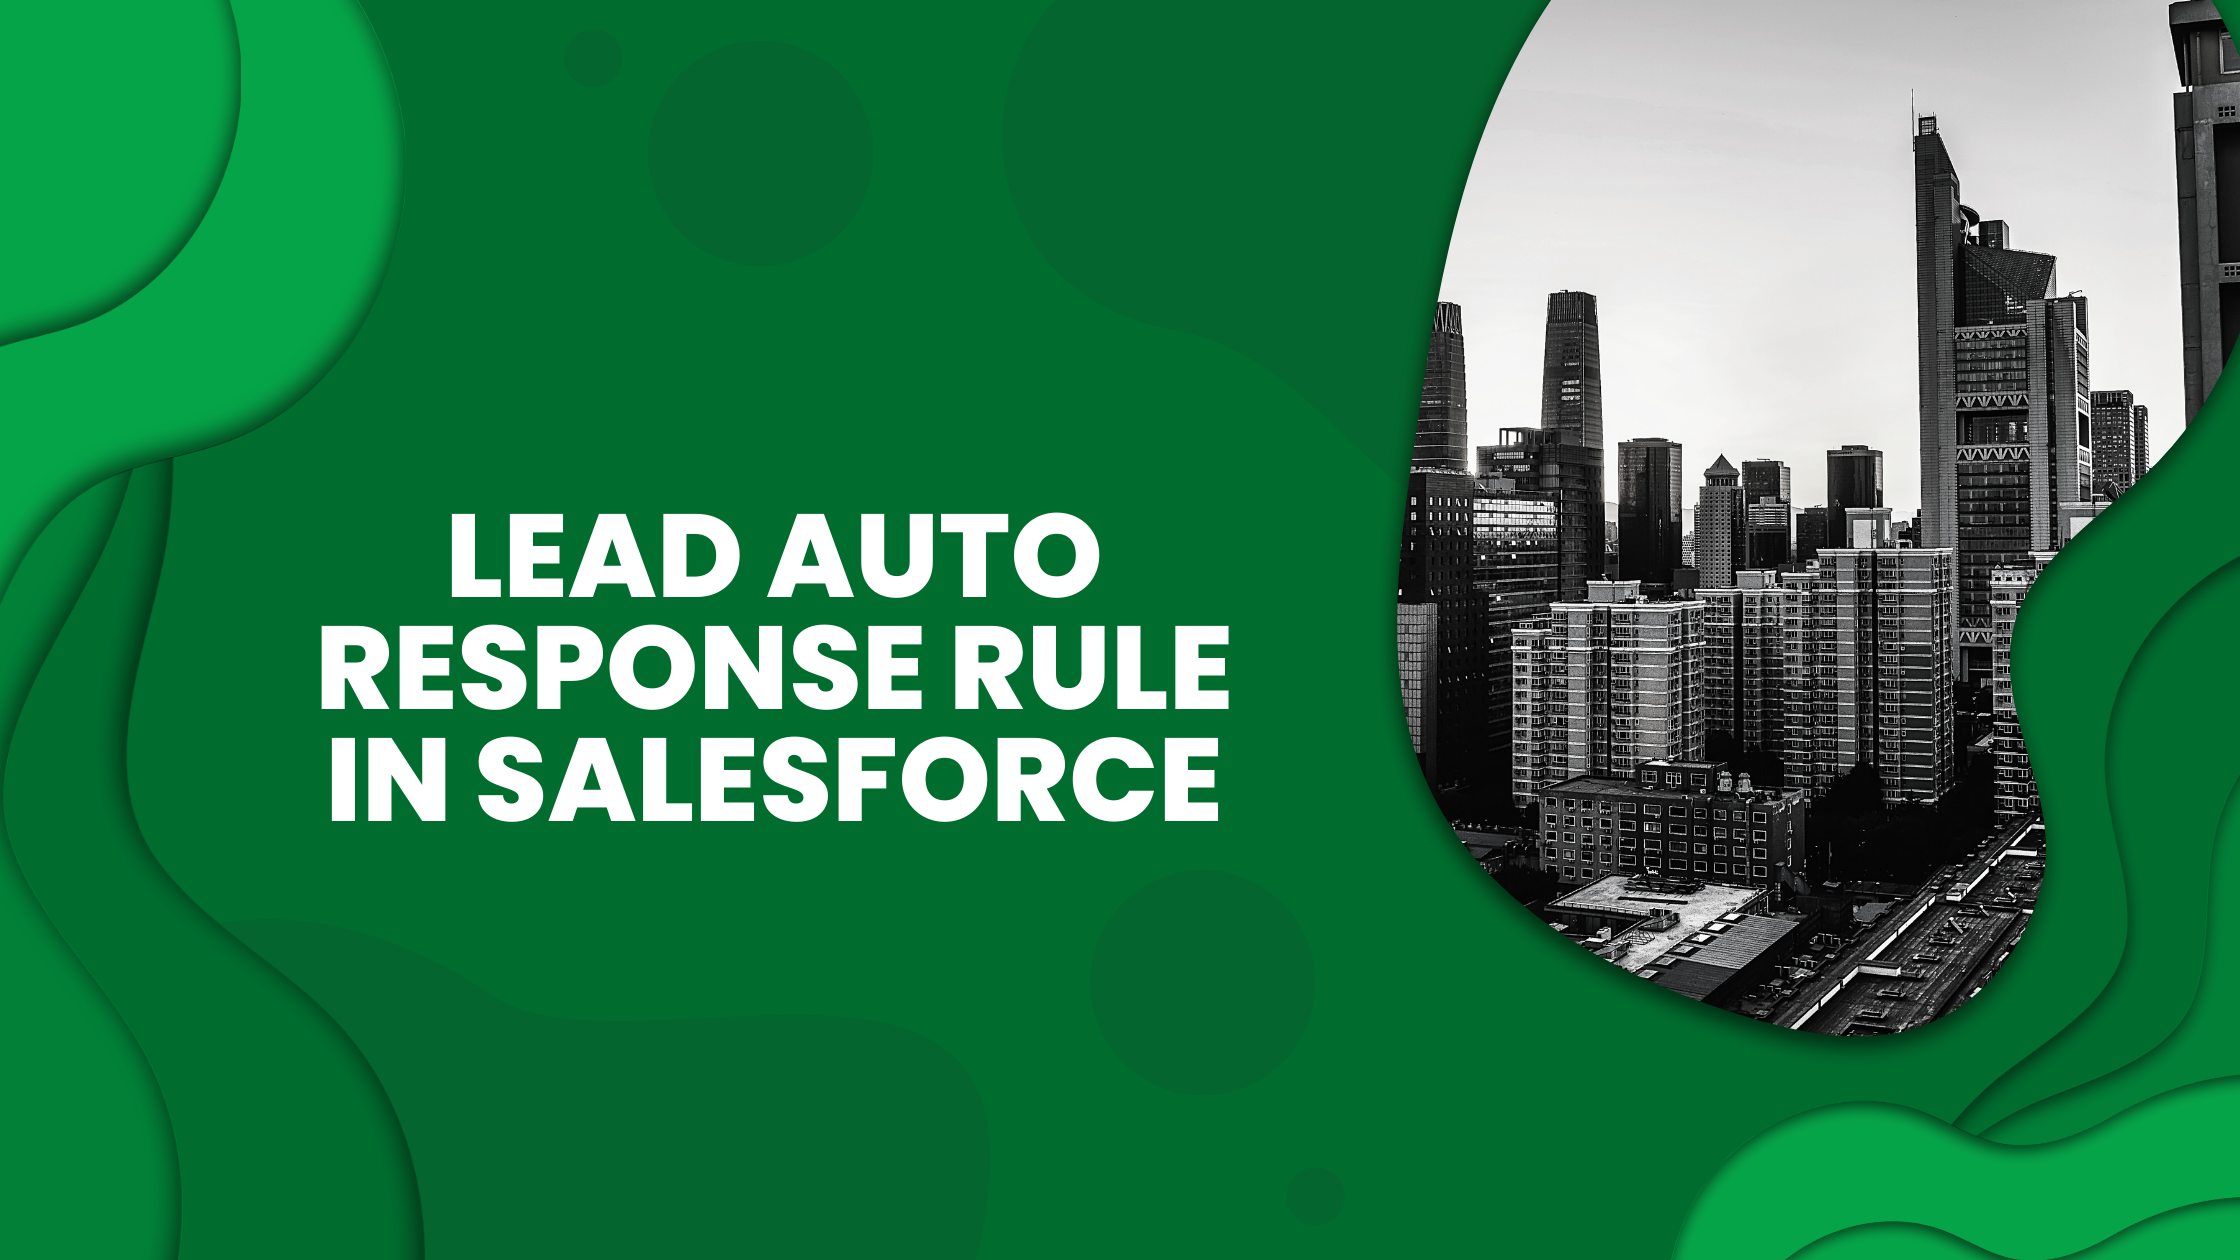 Lead Auto Response Rule in Salesforce